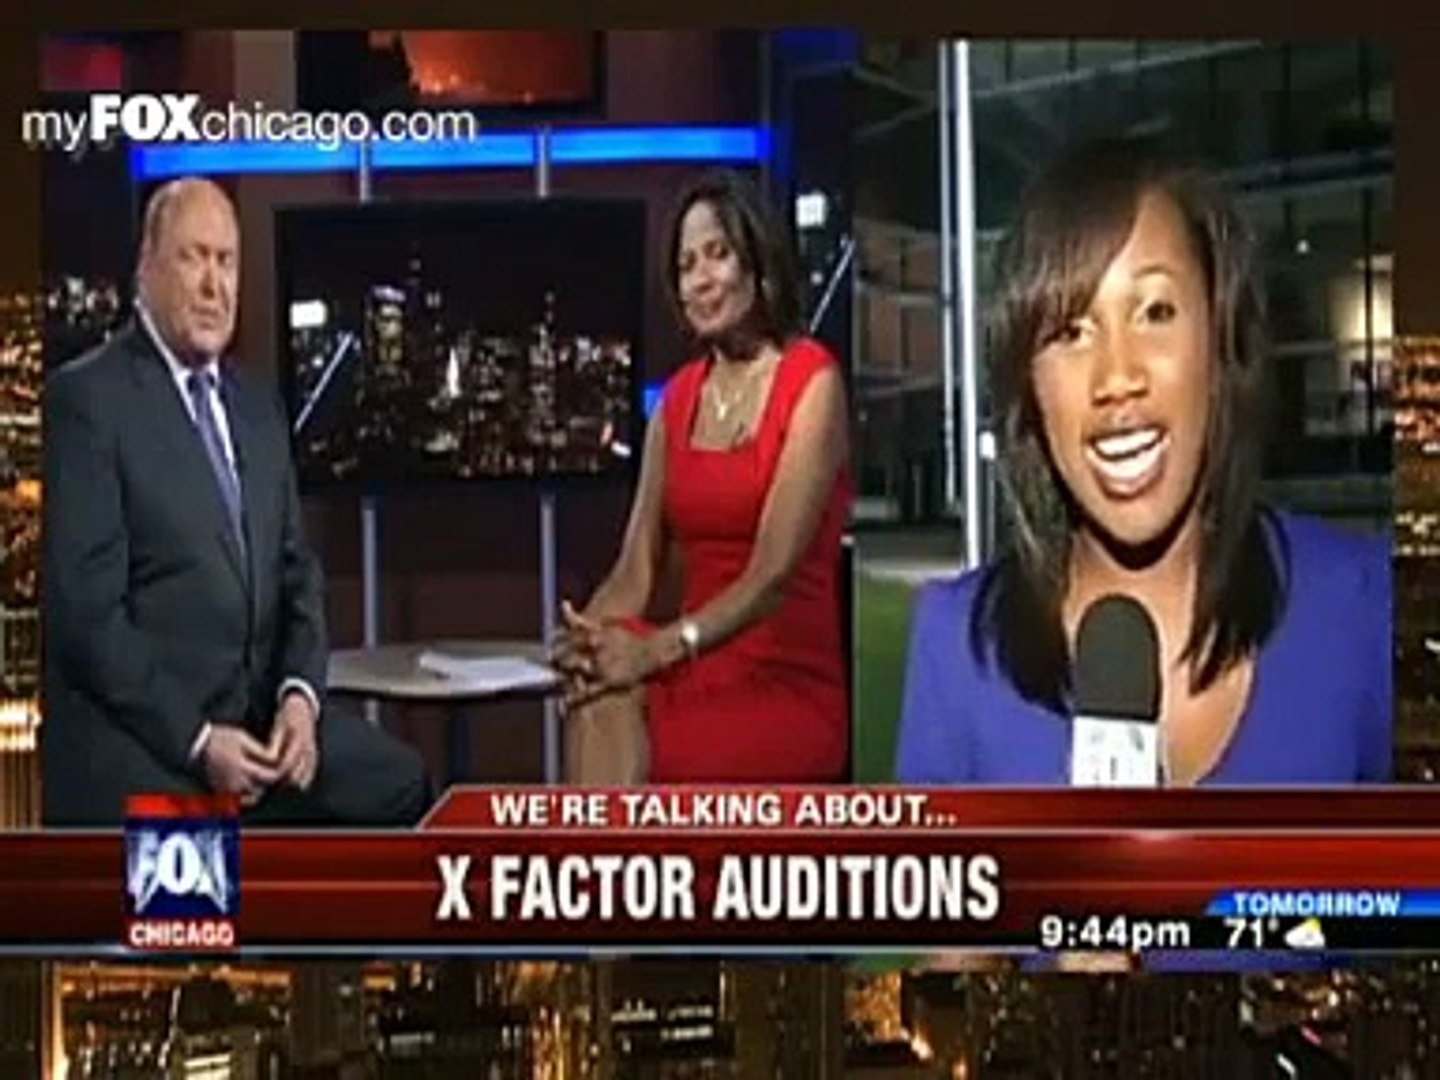 Fox Chicago News on Cheryl Cole (X Factor USA)